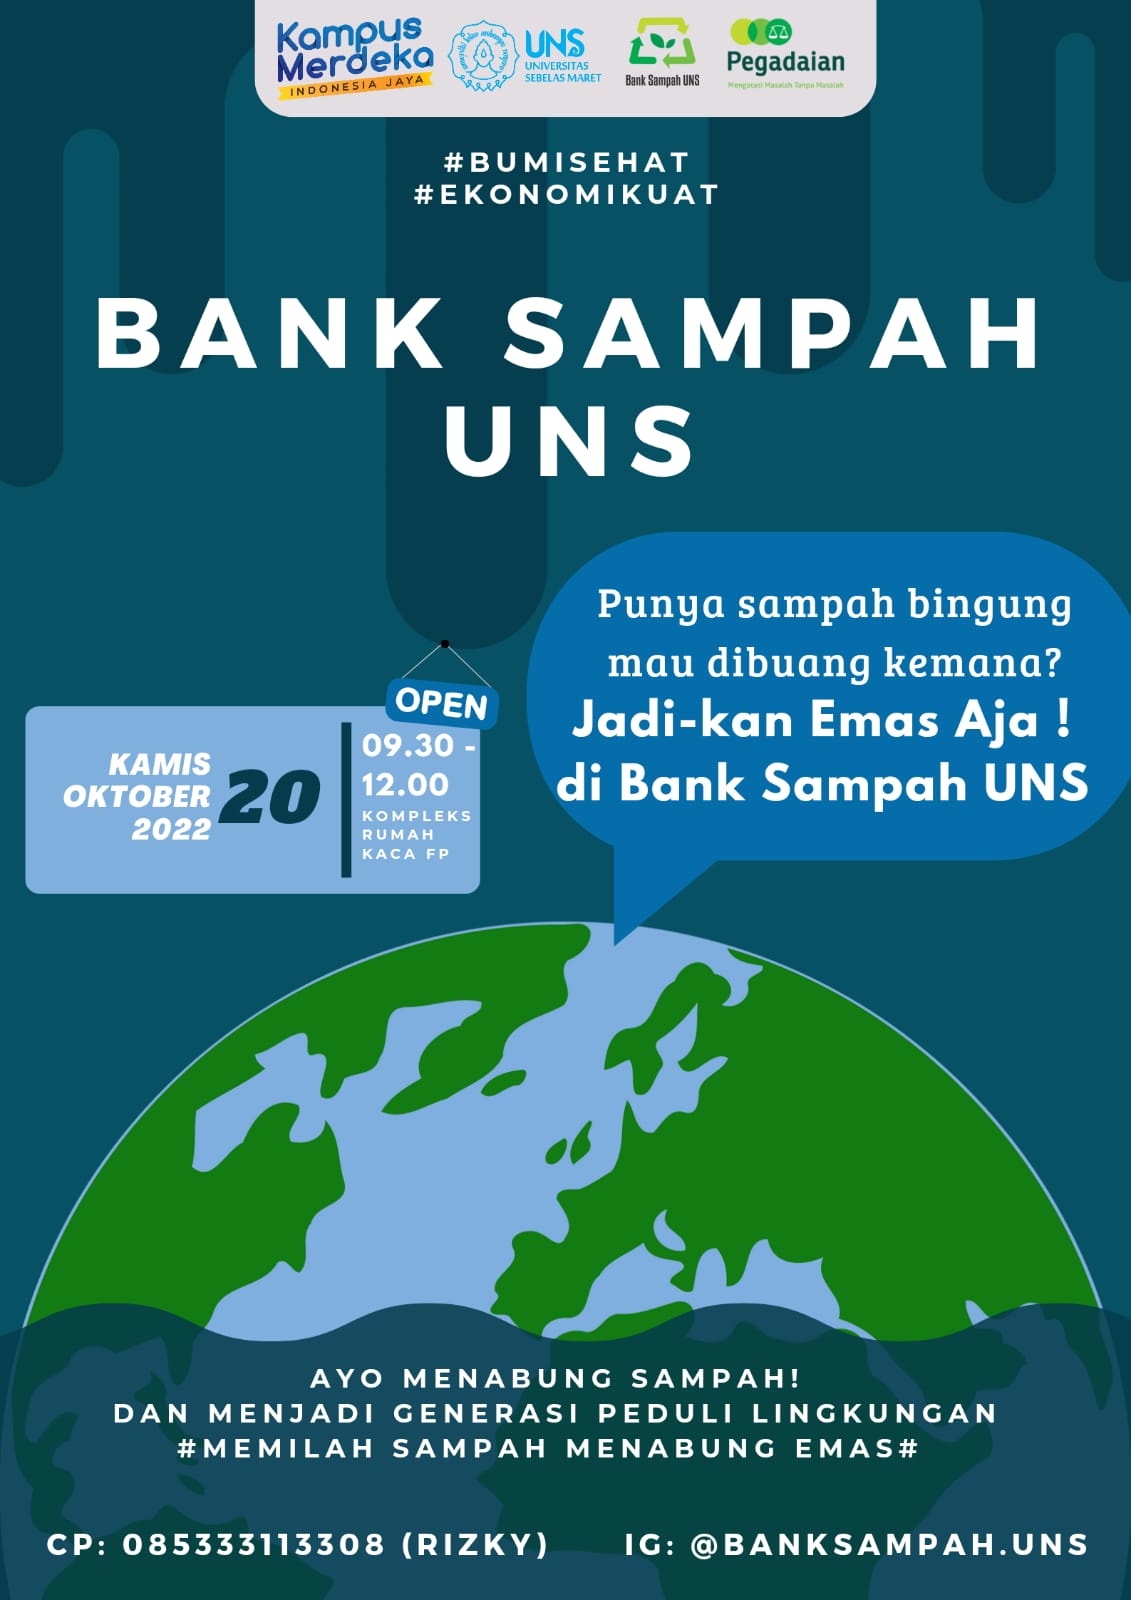 BANK SAMPAH UNS